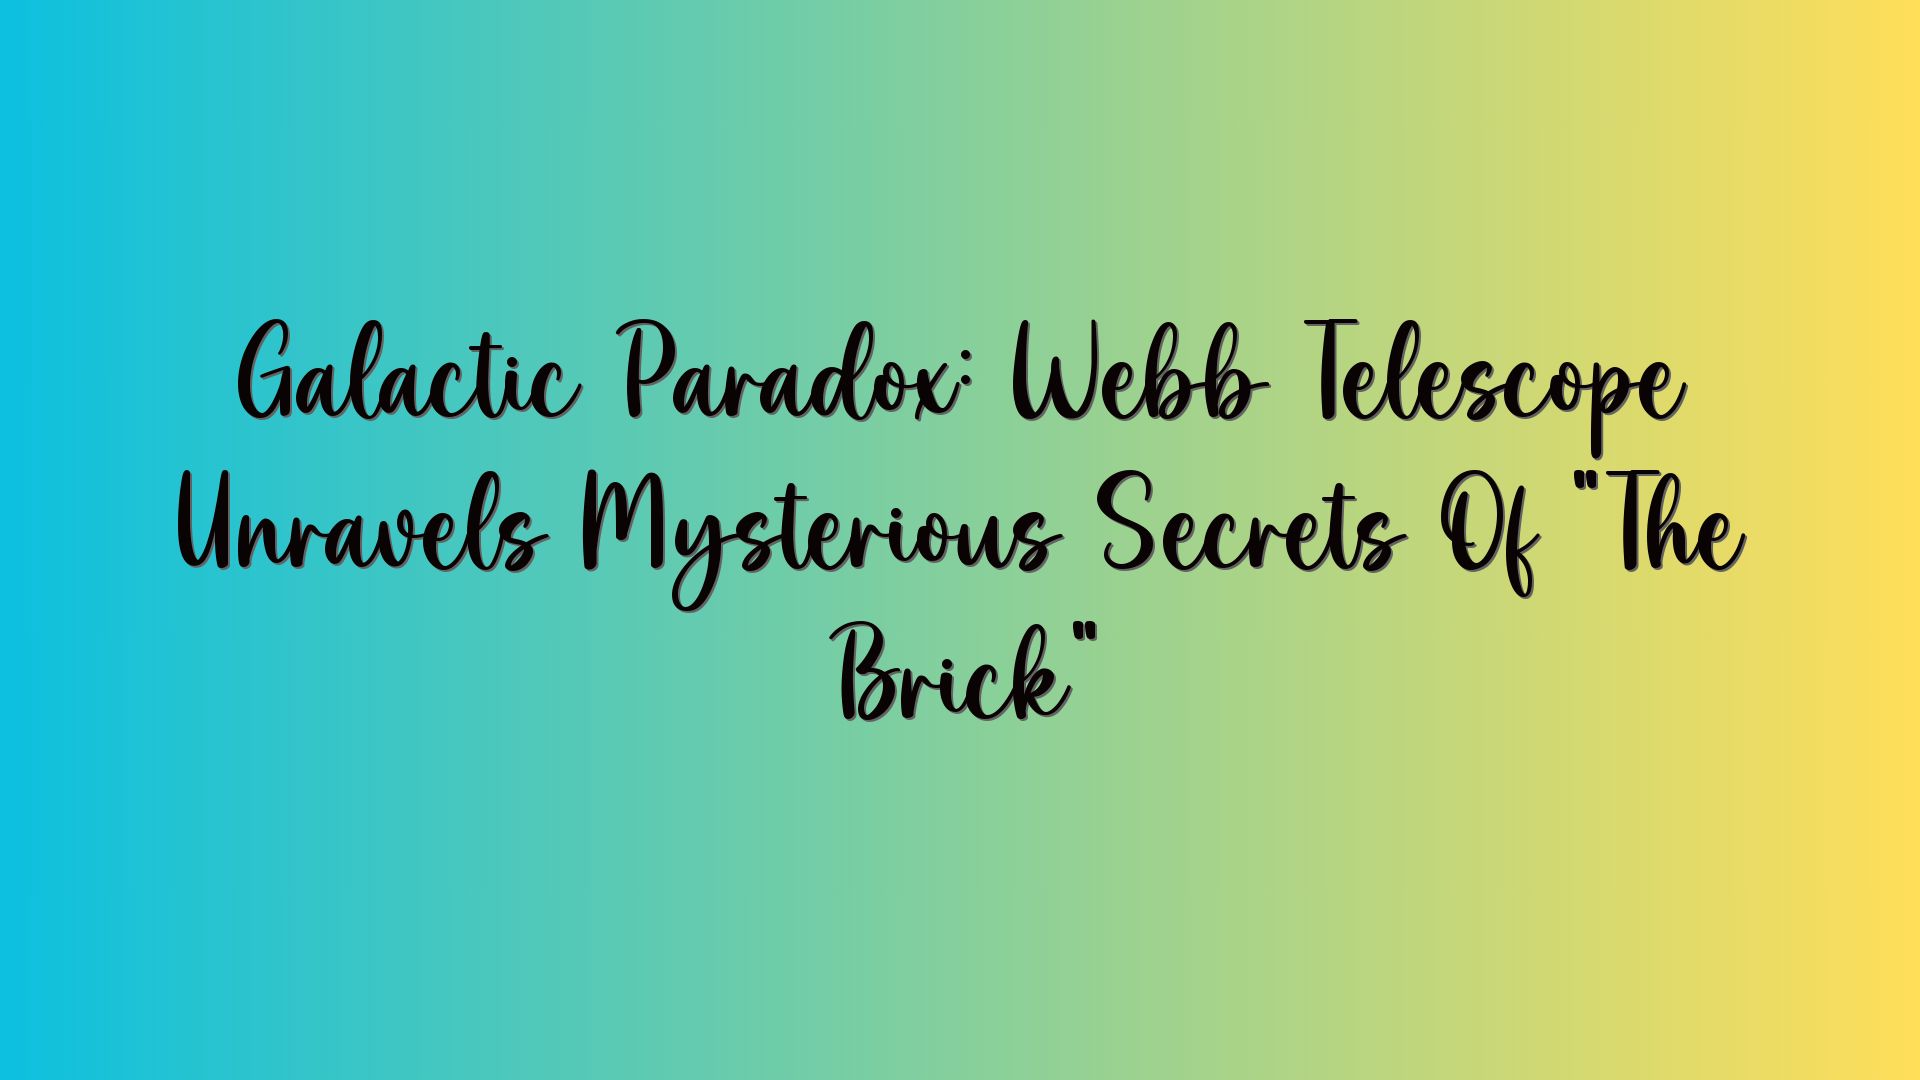 Galactic Paradox: Webb Telescope Unravels Mysterious Secrets Of “The Brick”